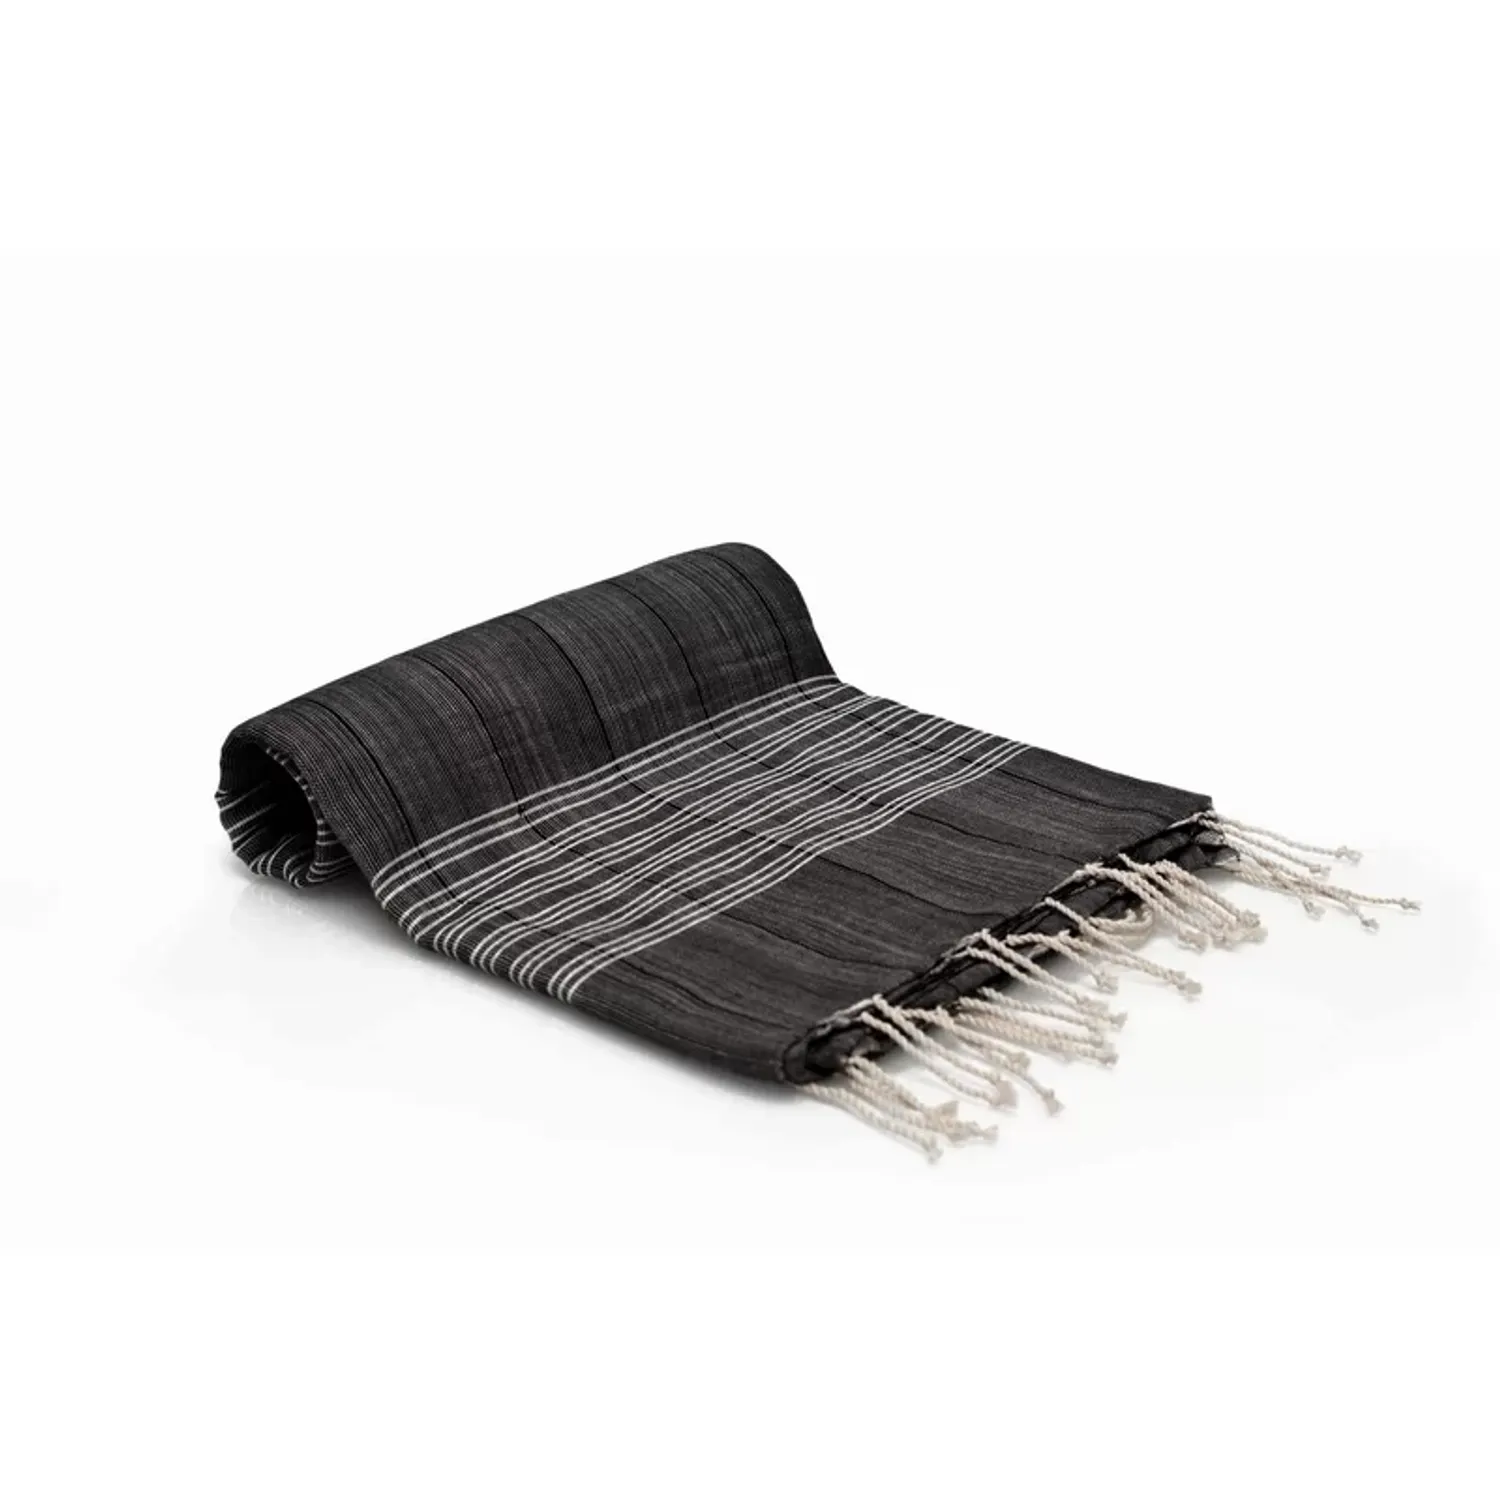 Shop Woodinville Turkish Cotton Towel Set (in black) from Wayfair on Openhaus